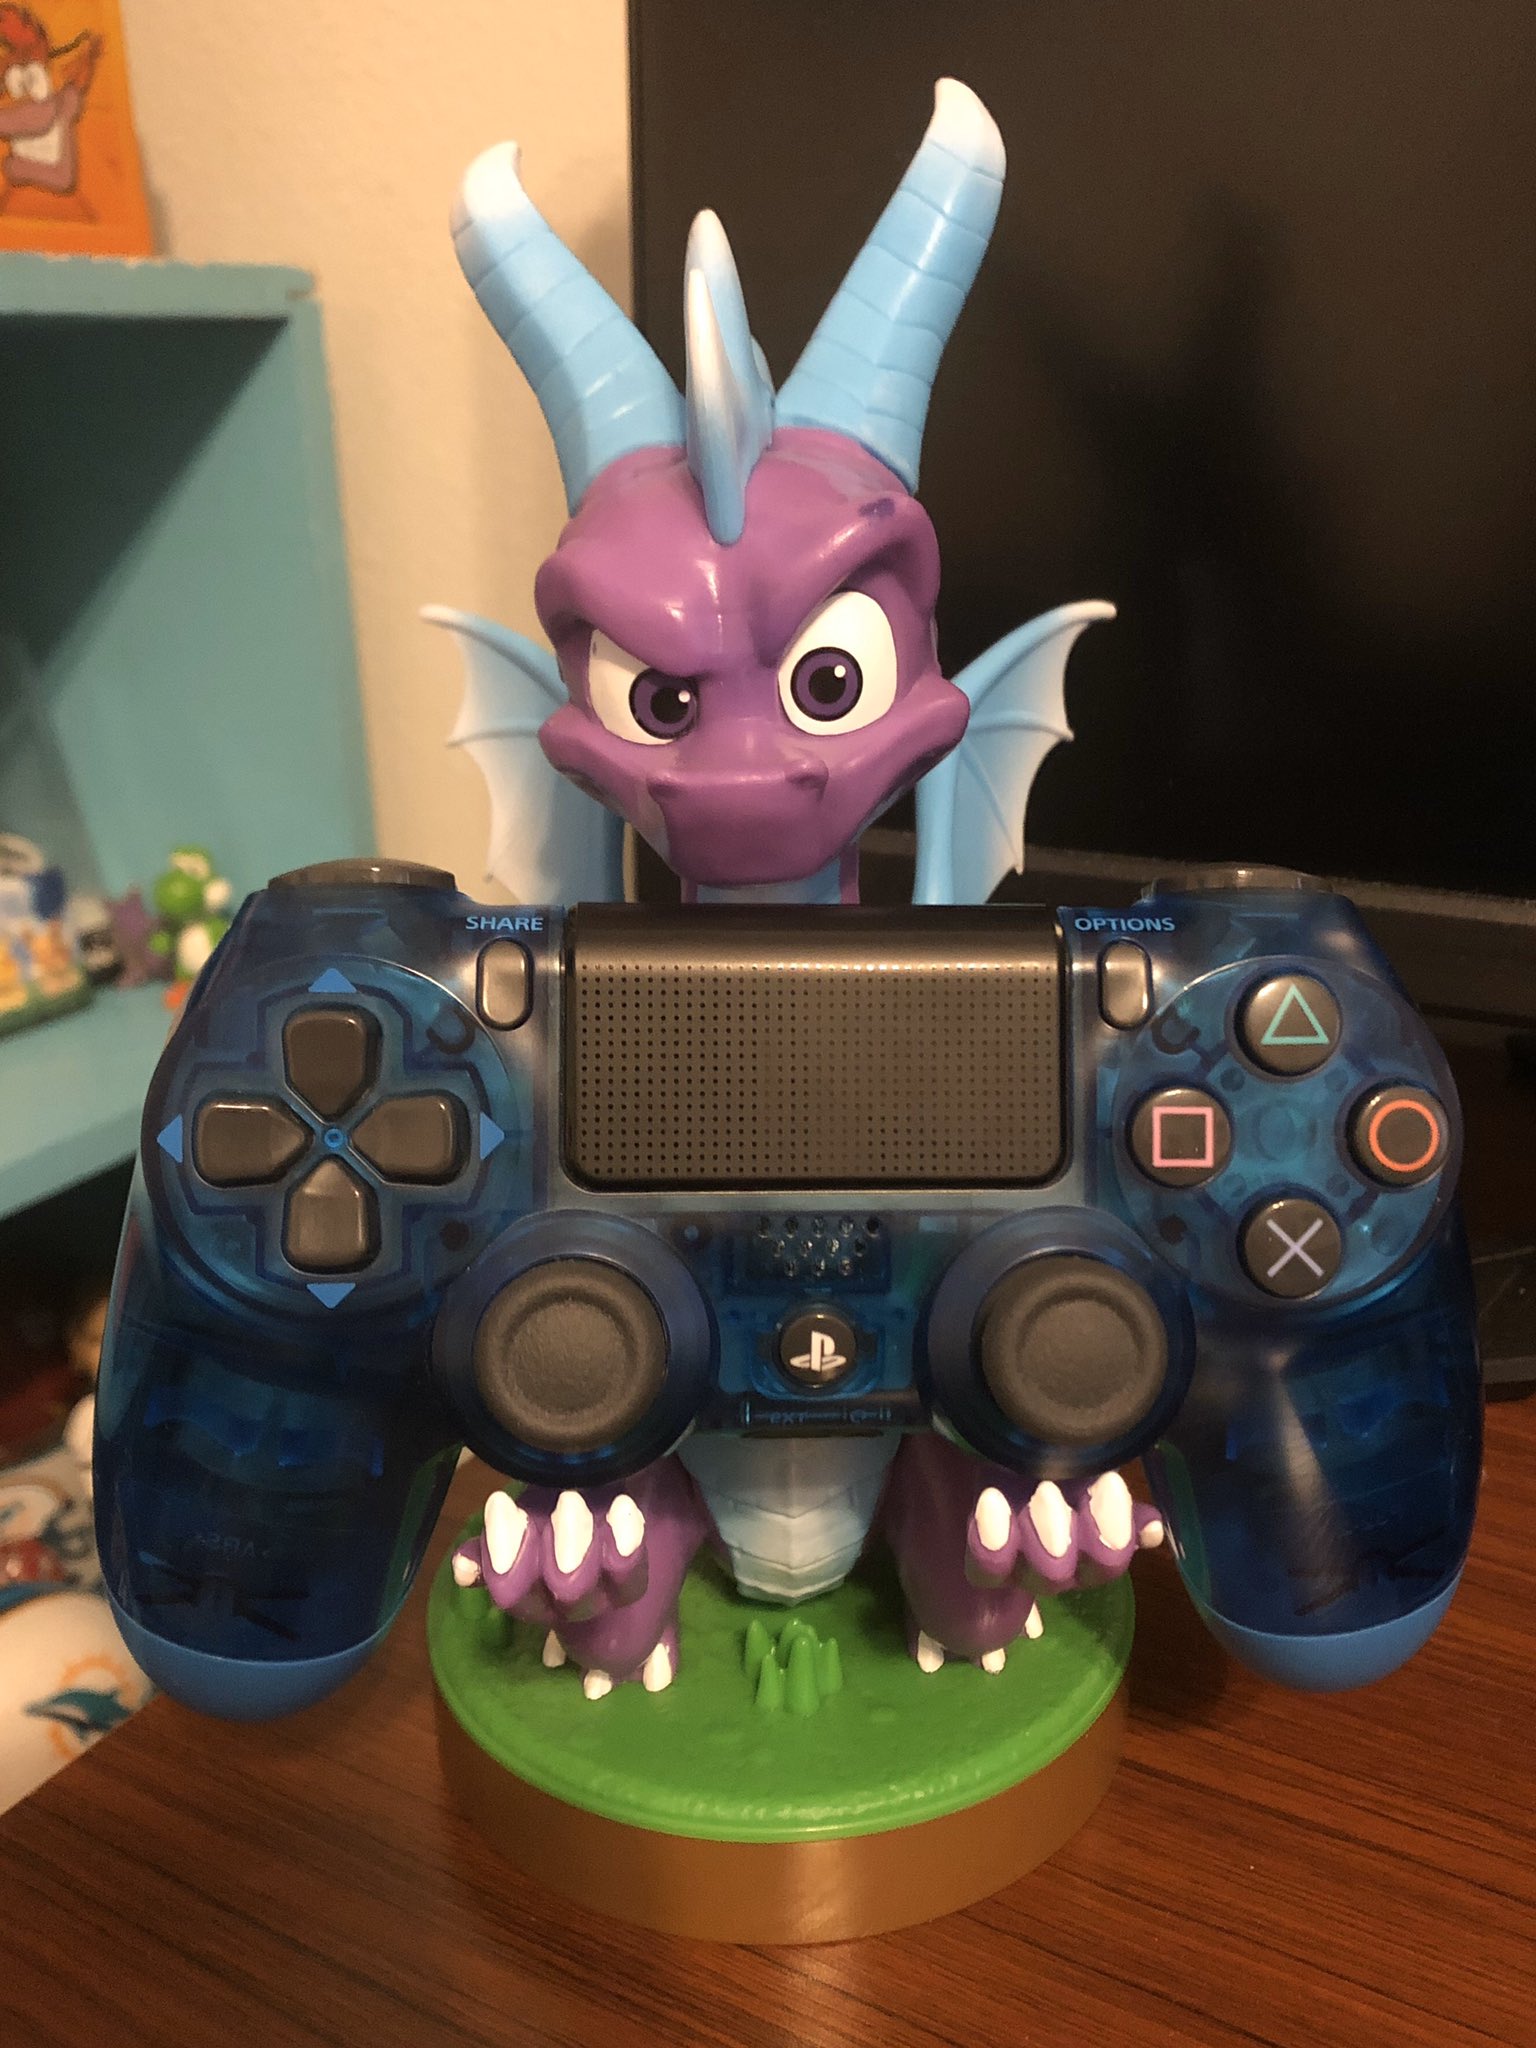 Maleri Hejse valg Spyro Universe 💎 on Twitter: "Just got in my Ice Spyro controller holder  from @ExquisiteGamin3! #Spyro #SpyroTheDragon https://t.co/BML5Zt2SVR" / X